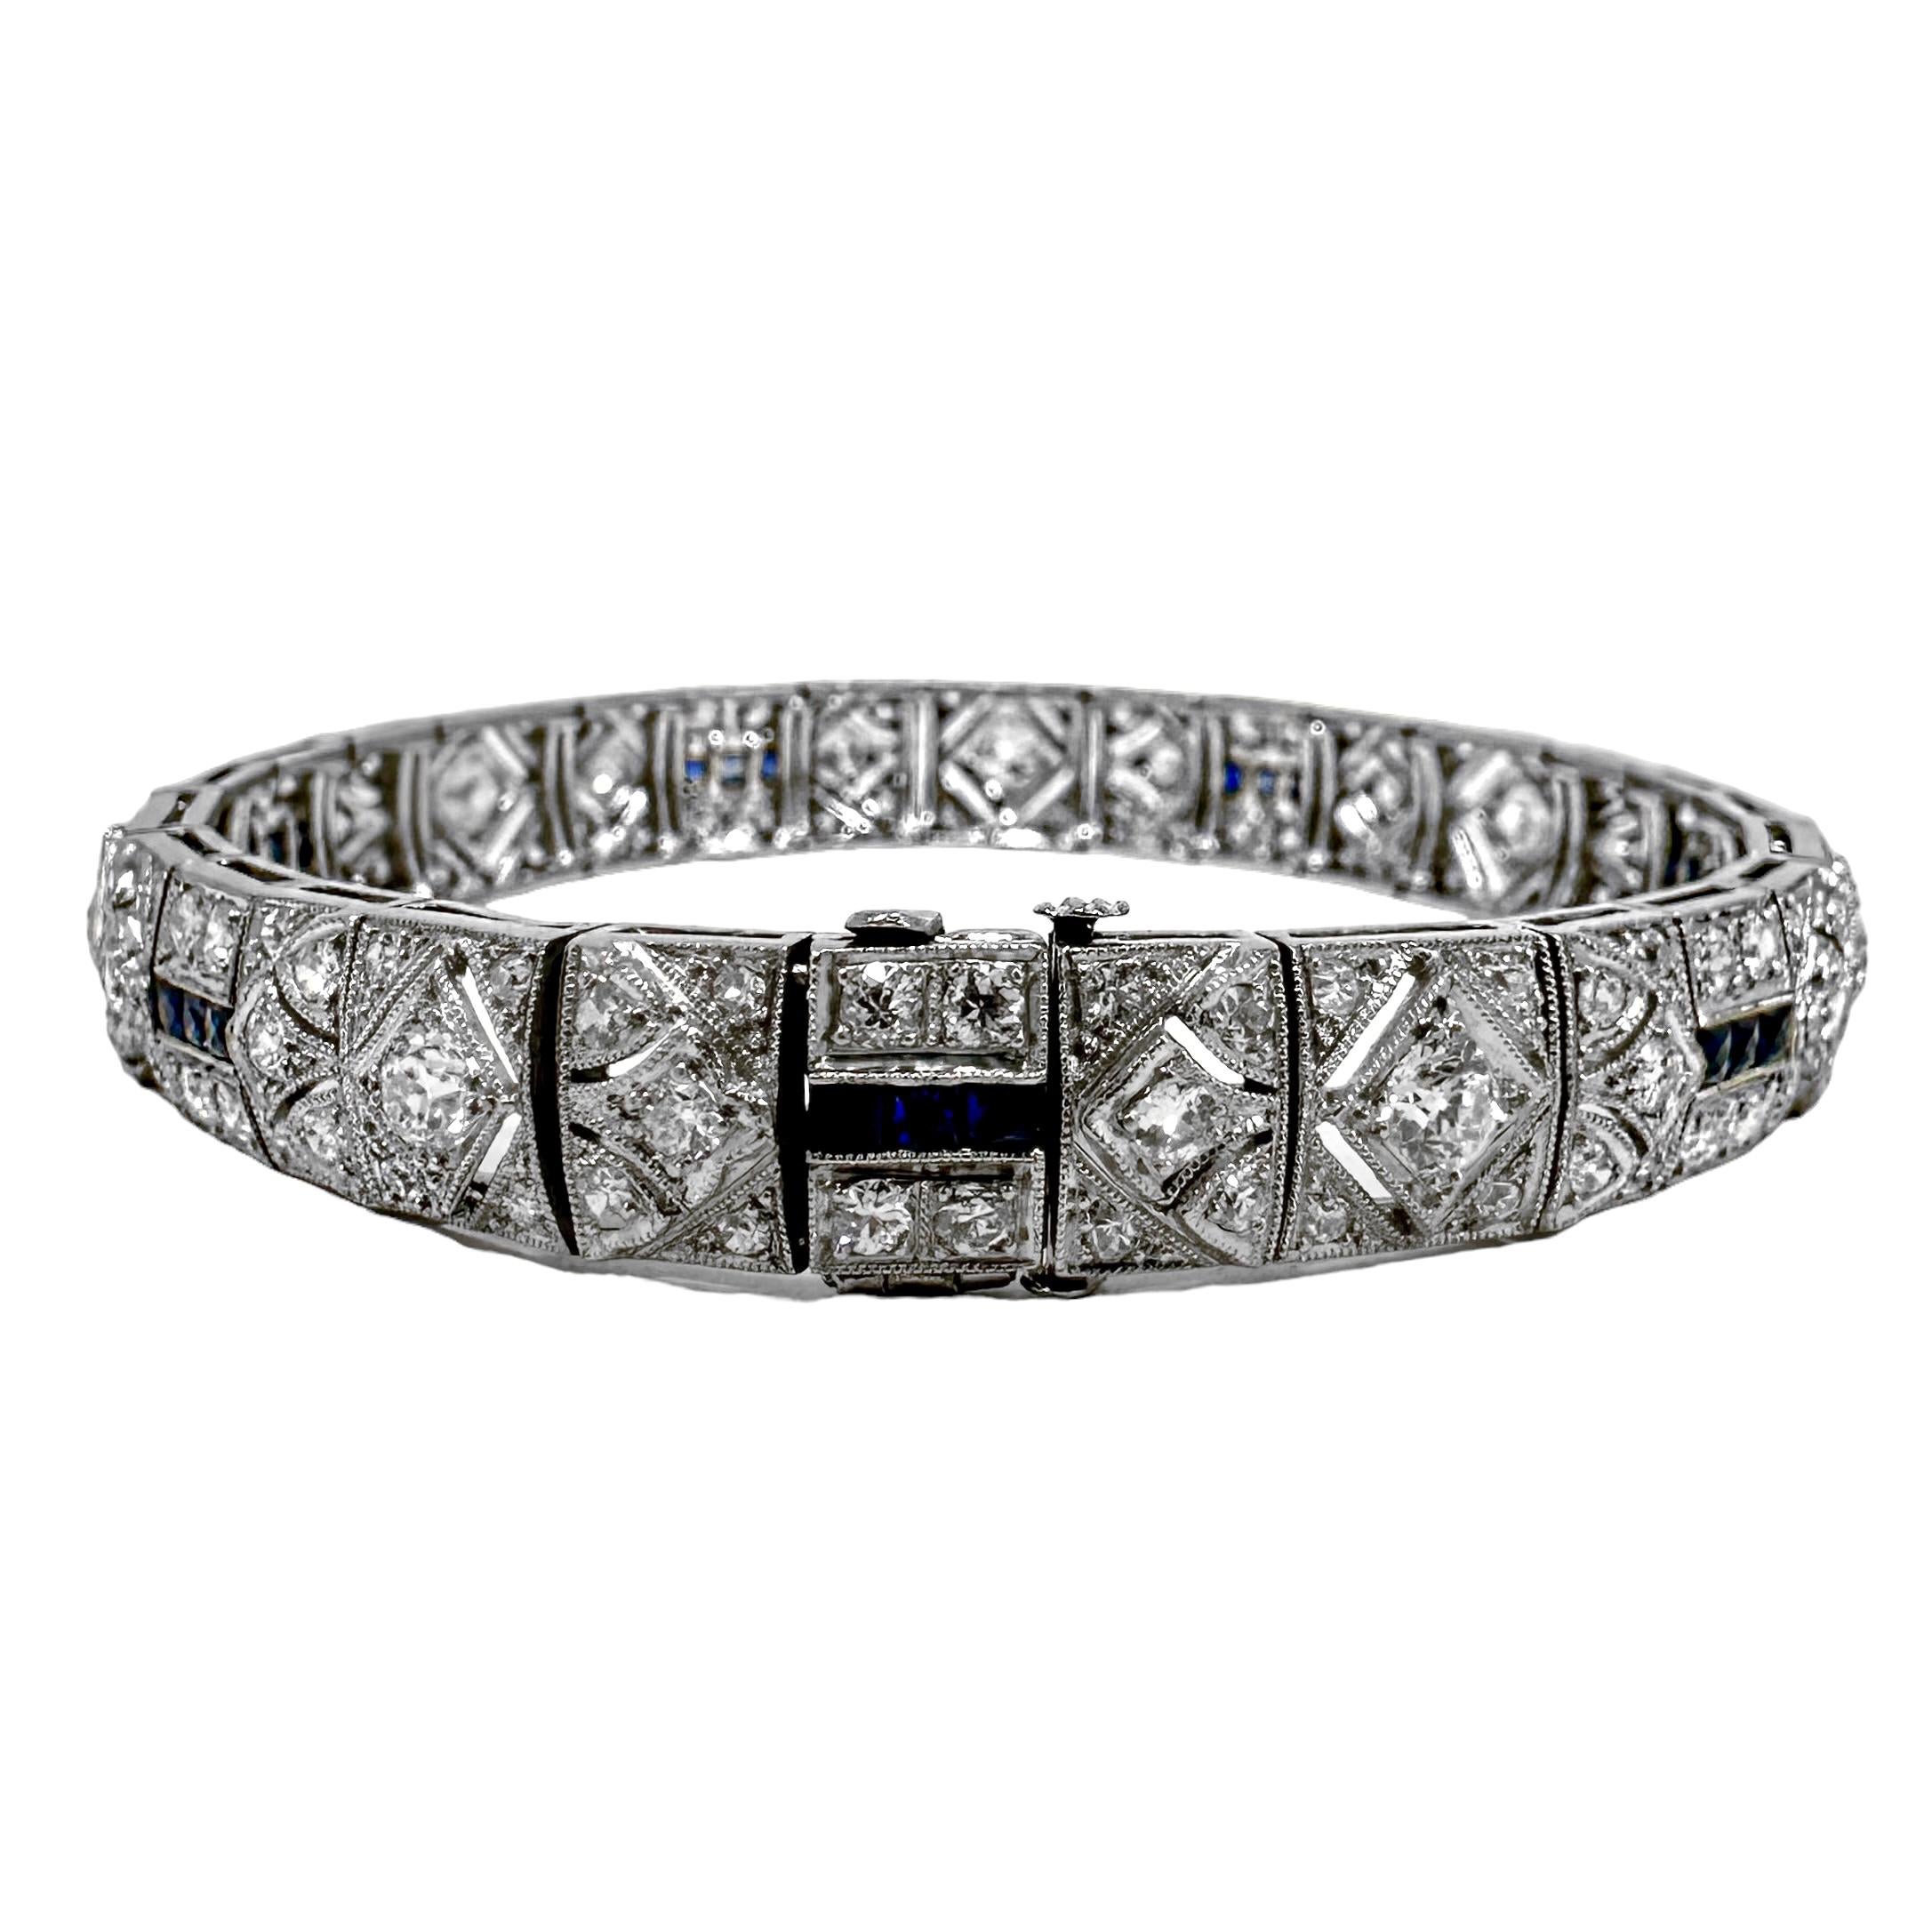 Art Deco Charming Original Art-Deco Period Platinum, Diamond and Sapphire Bracelet For Sale